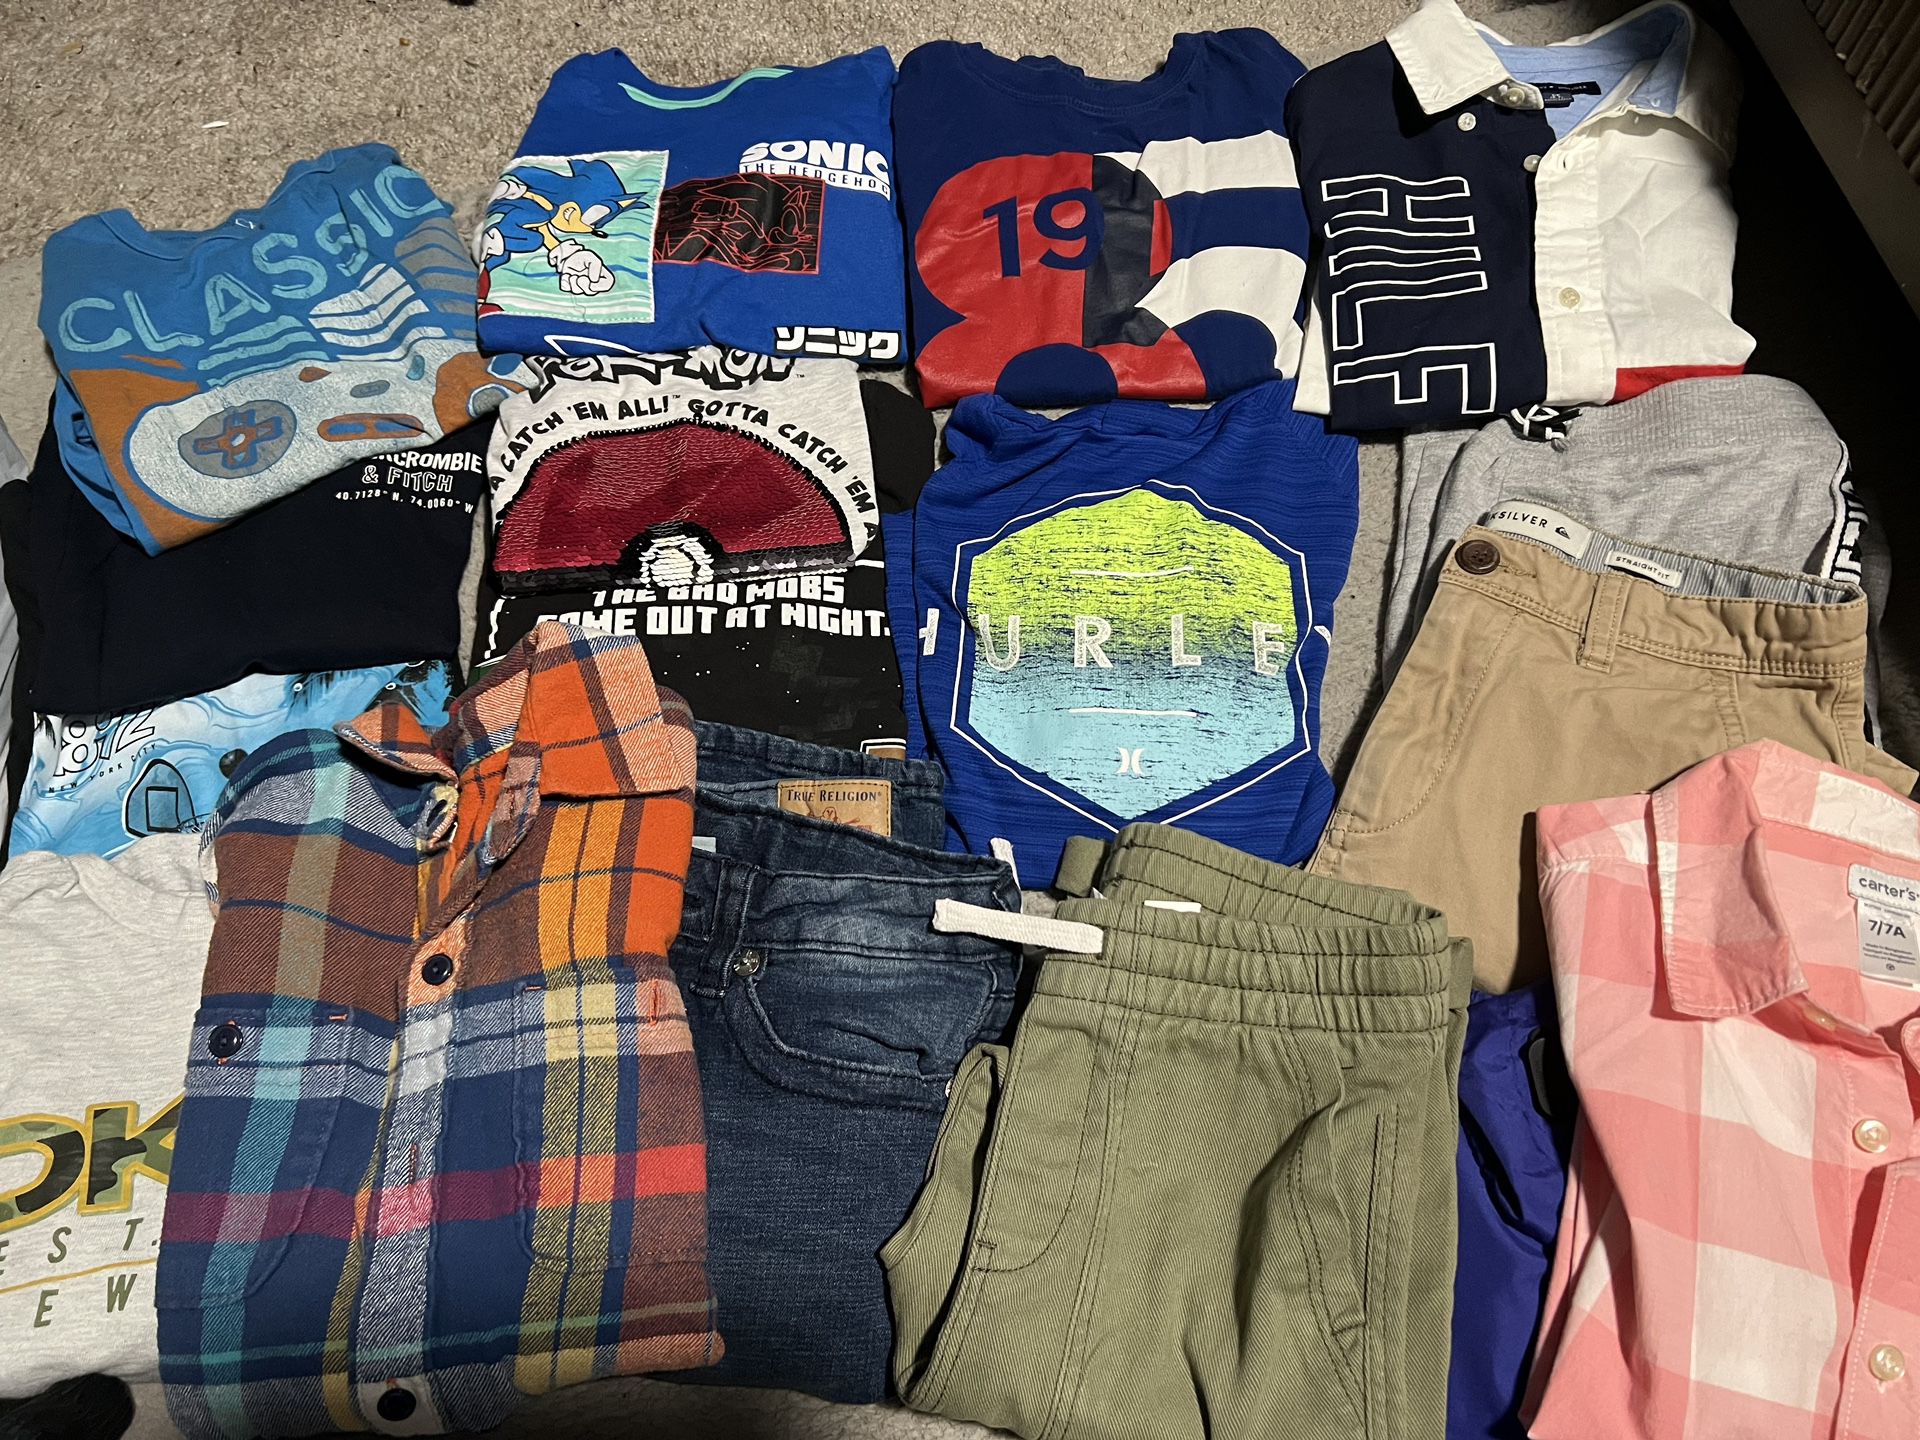 Boys Clothing Bundle 6-8 Years old